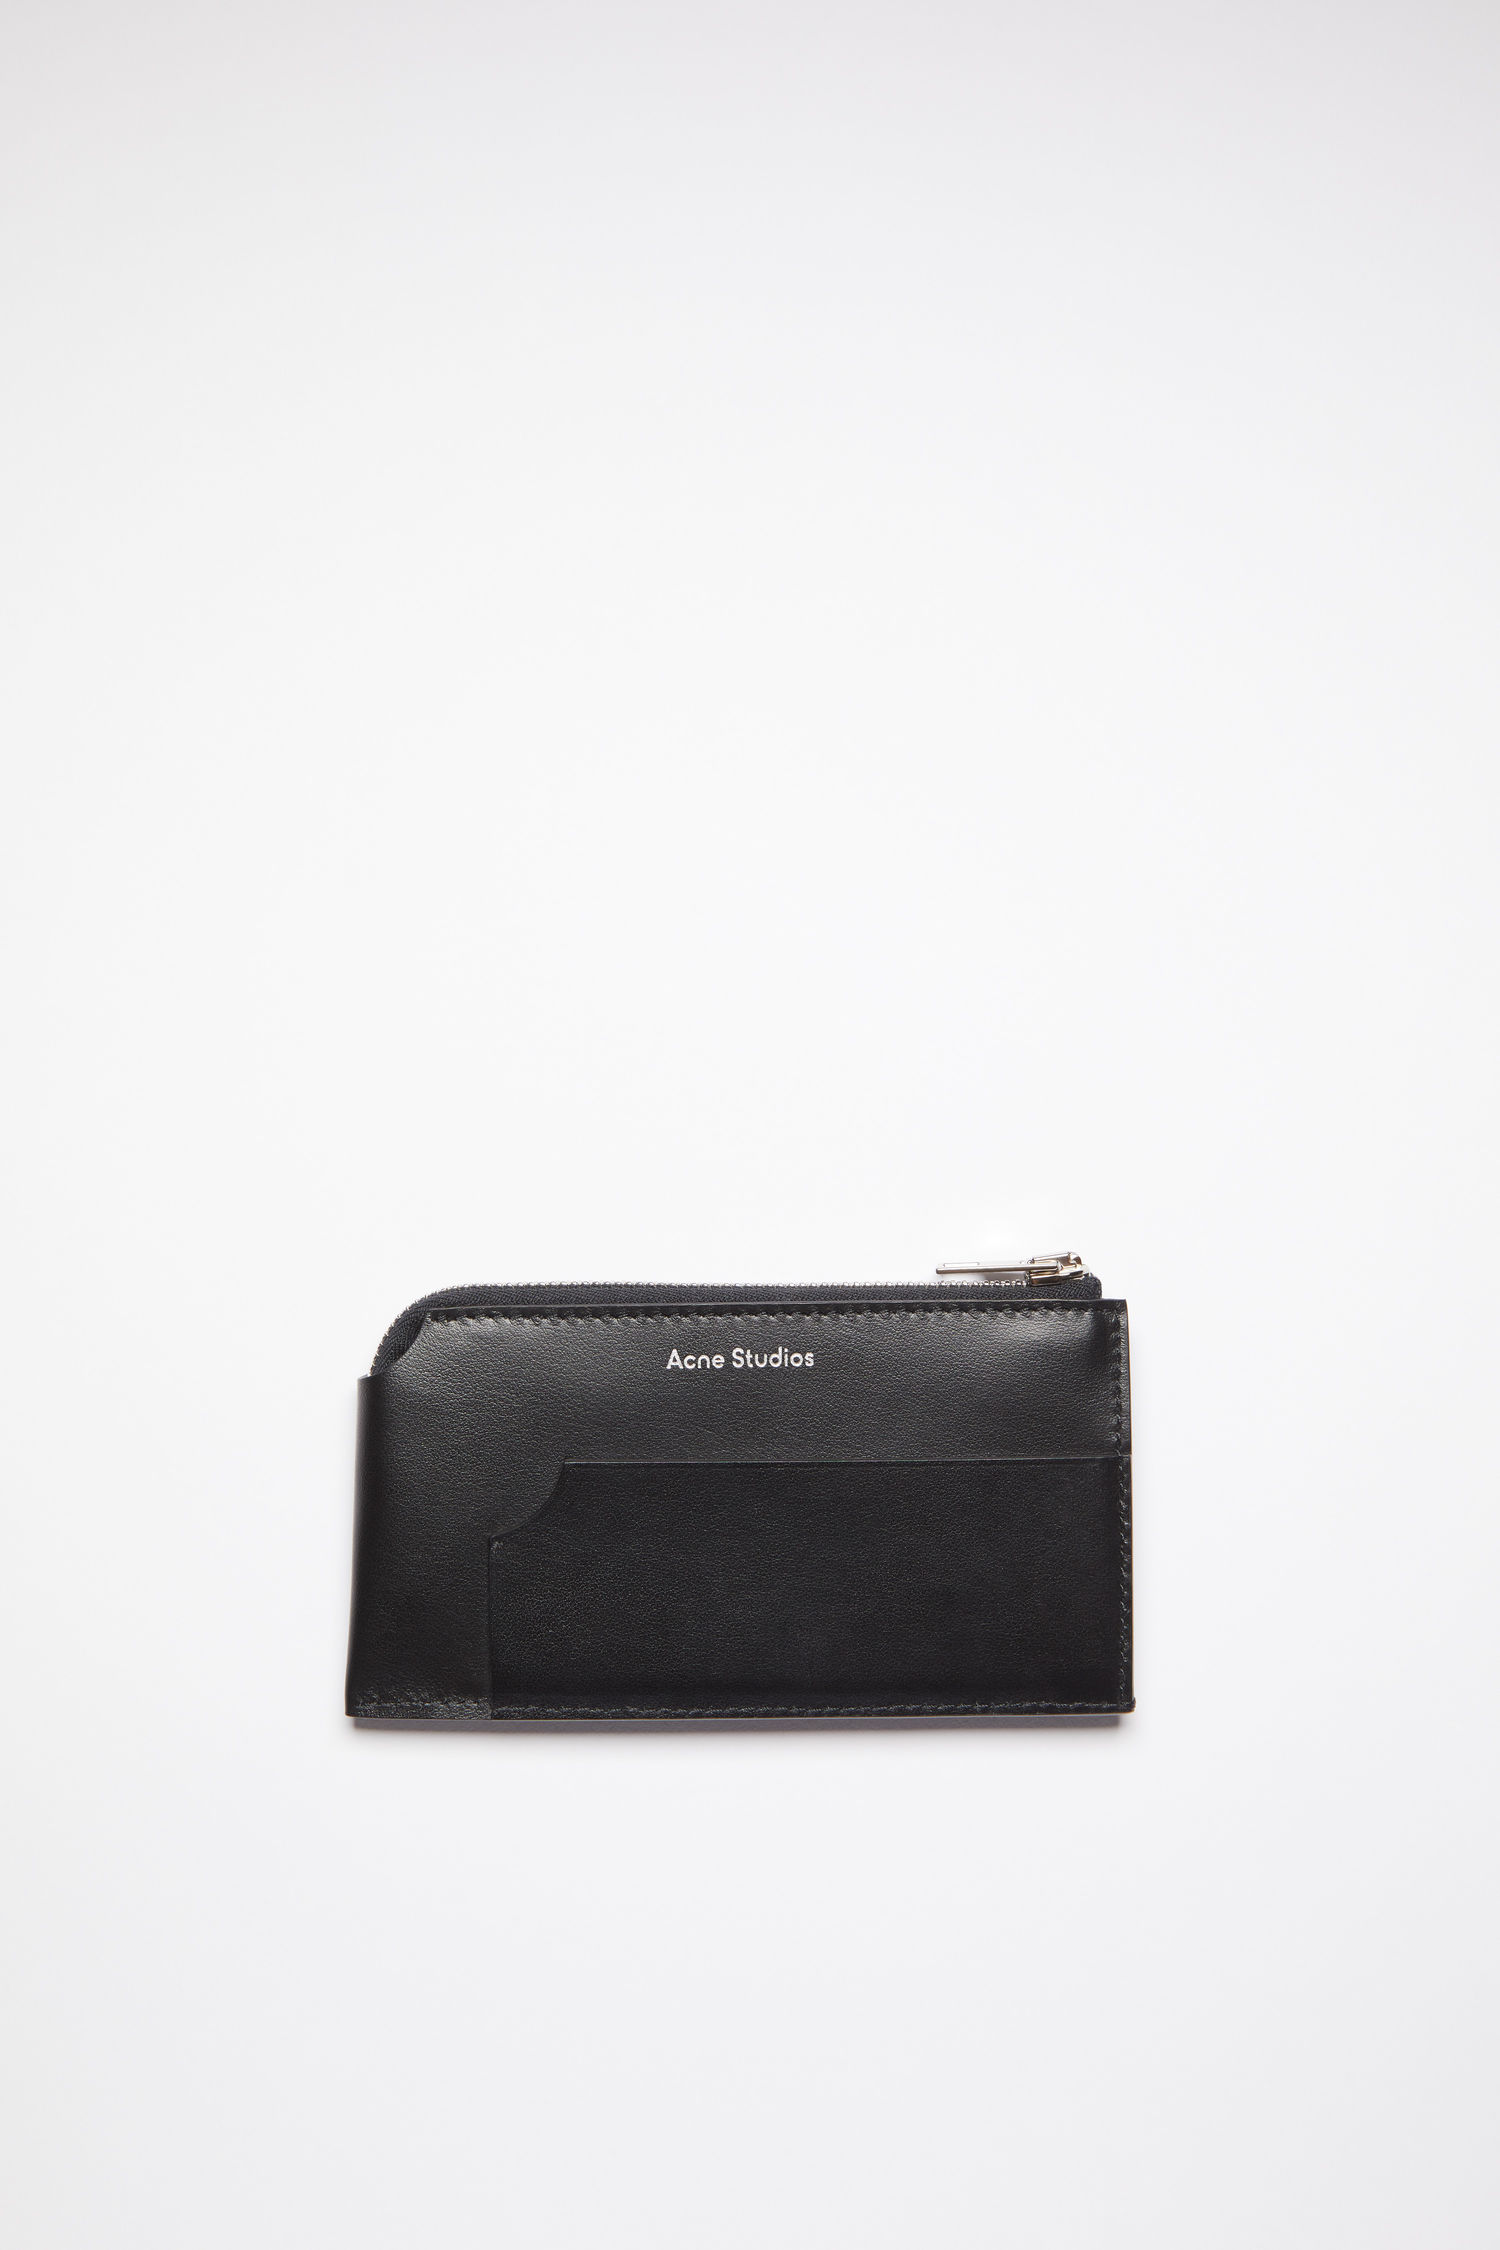 Acne Studios - Leather zip wallet - Black